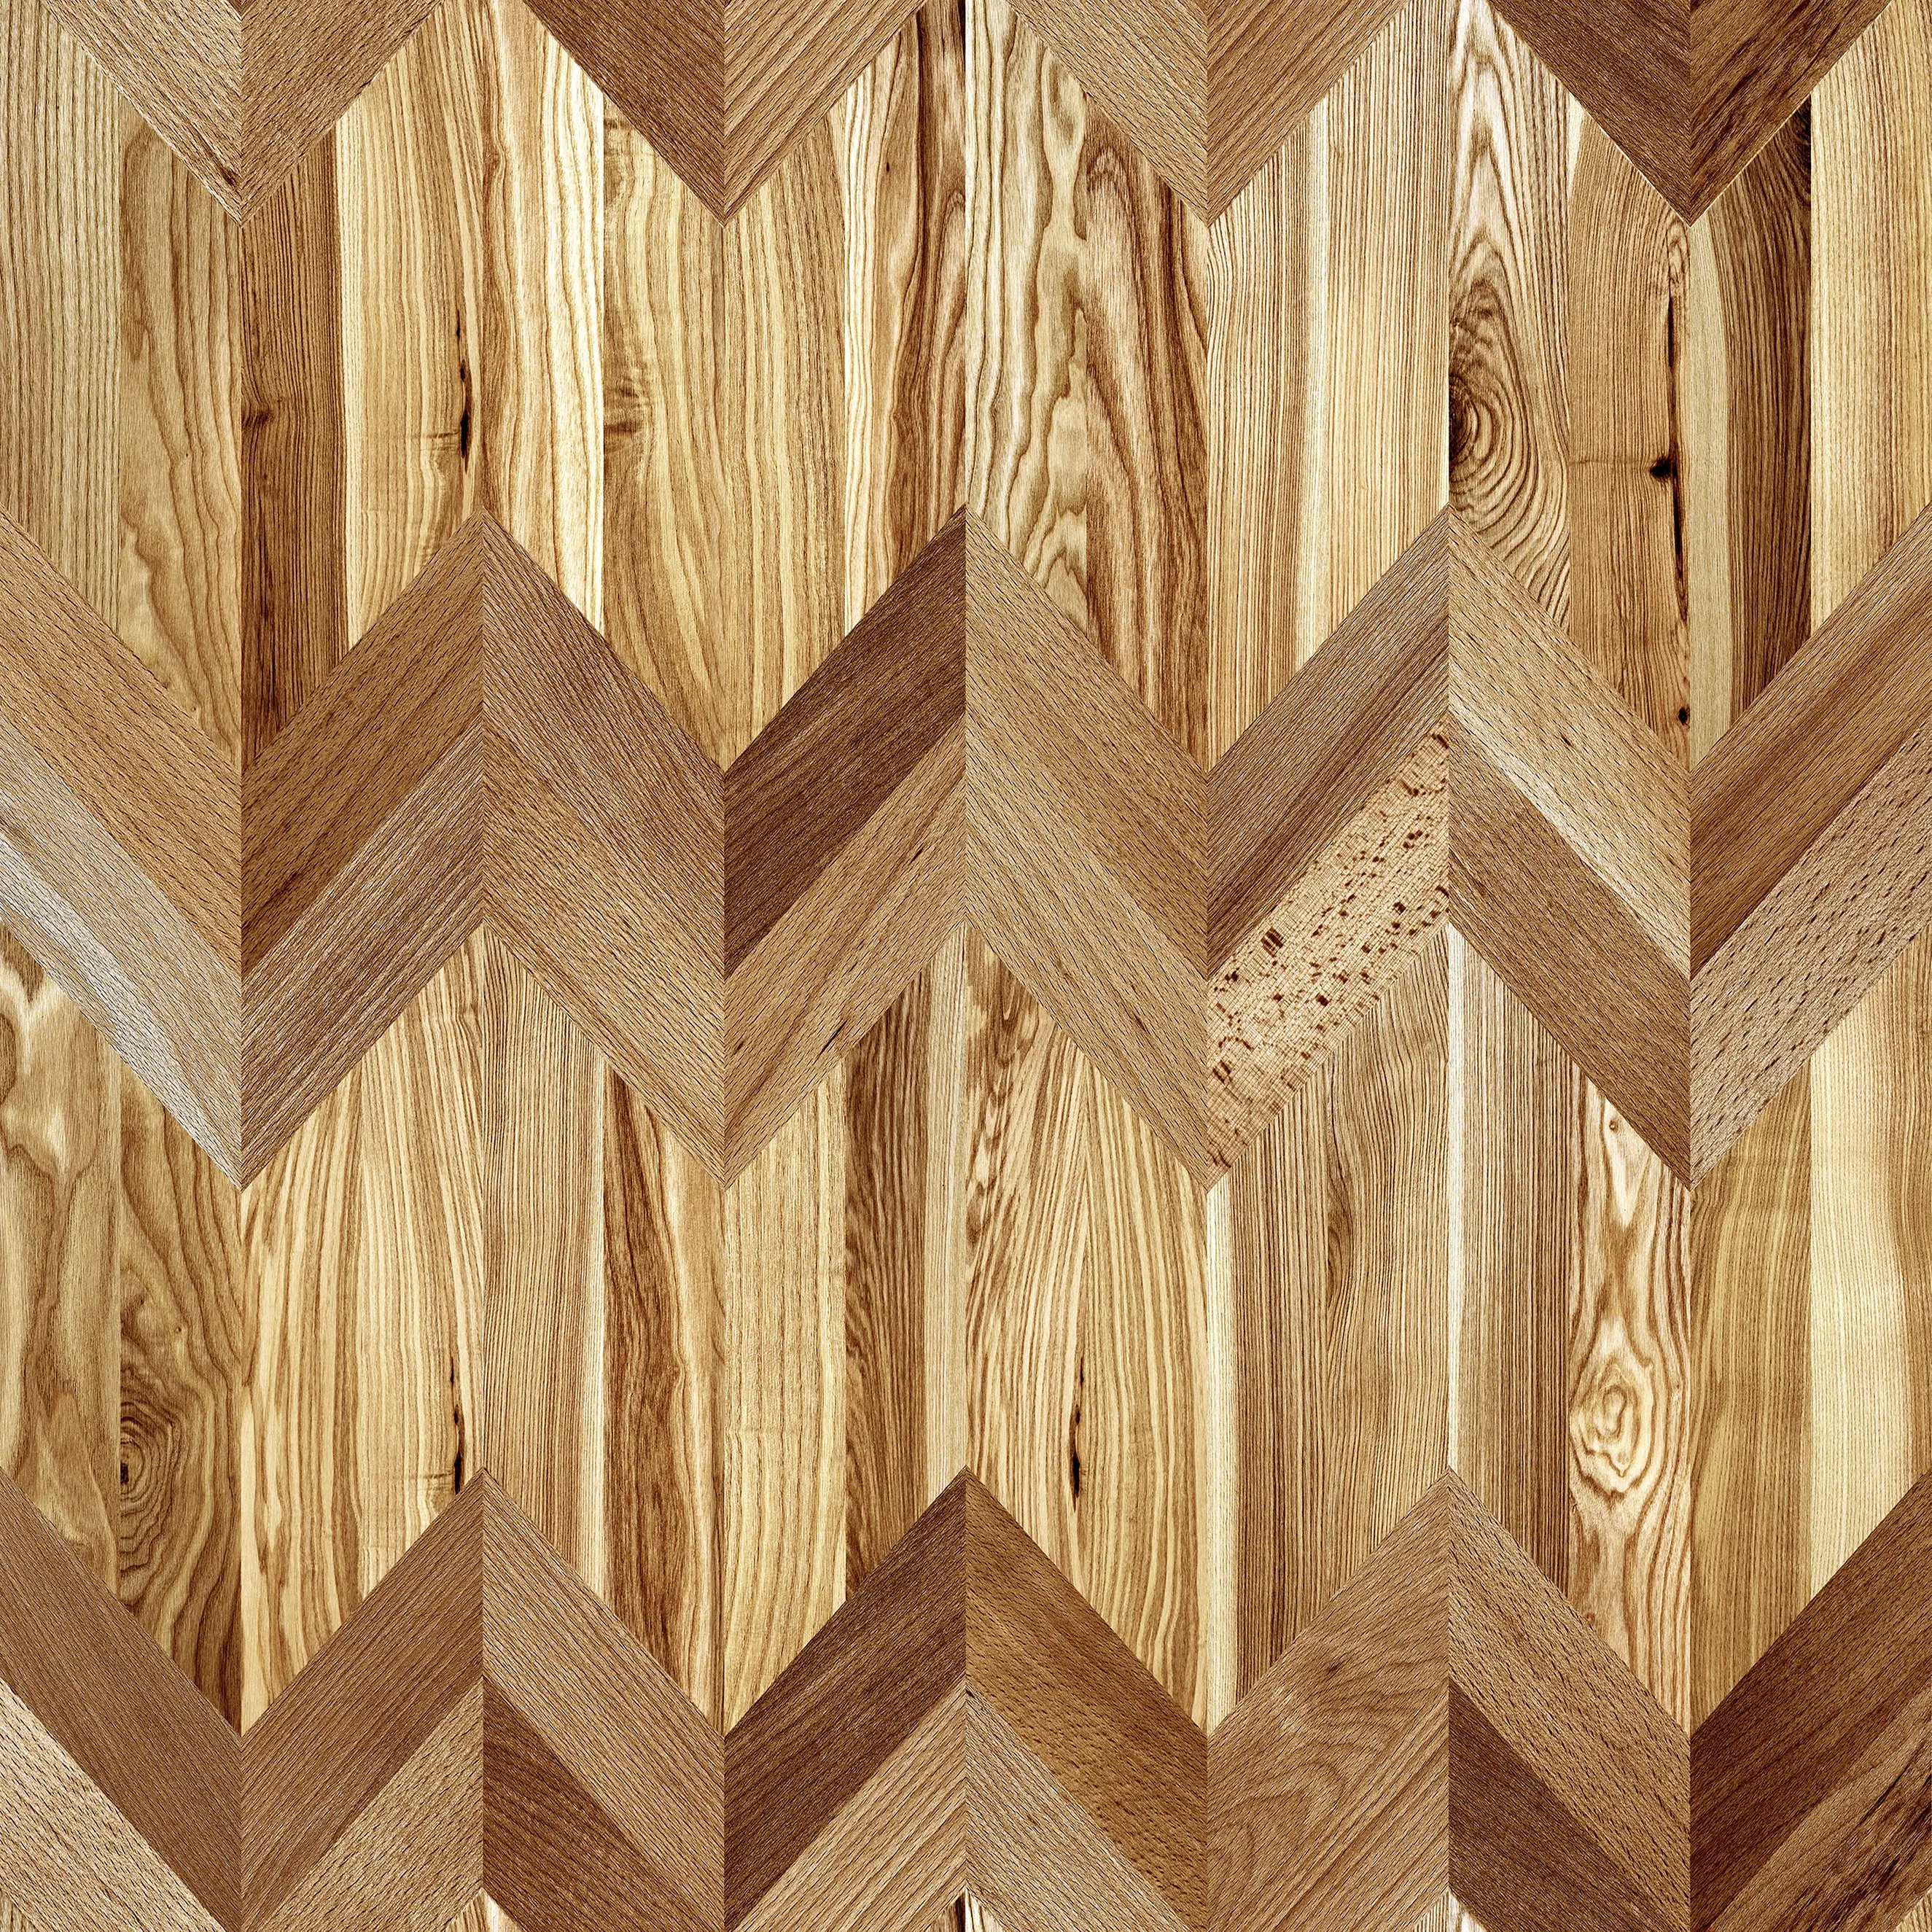 New Arrival PVC 3d wooden texture design Wallpaper Interior coating wall paper geometric pattern modern design home decor